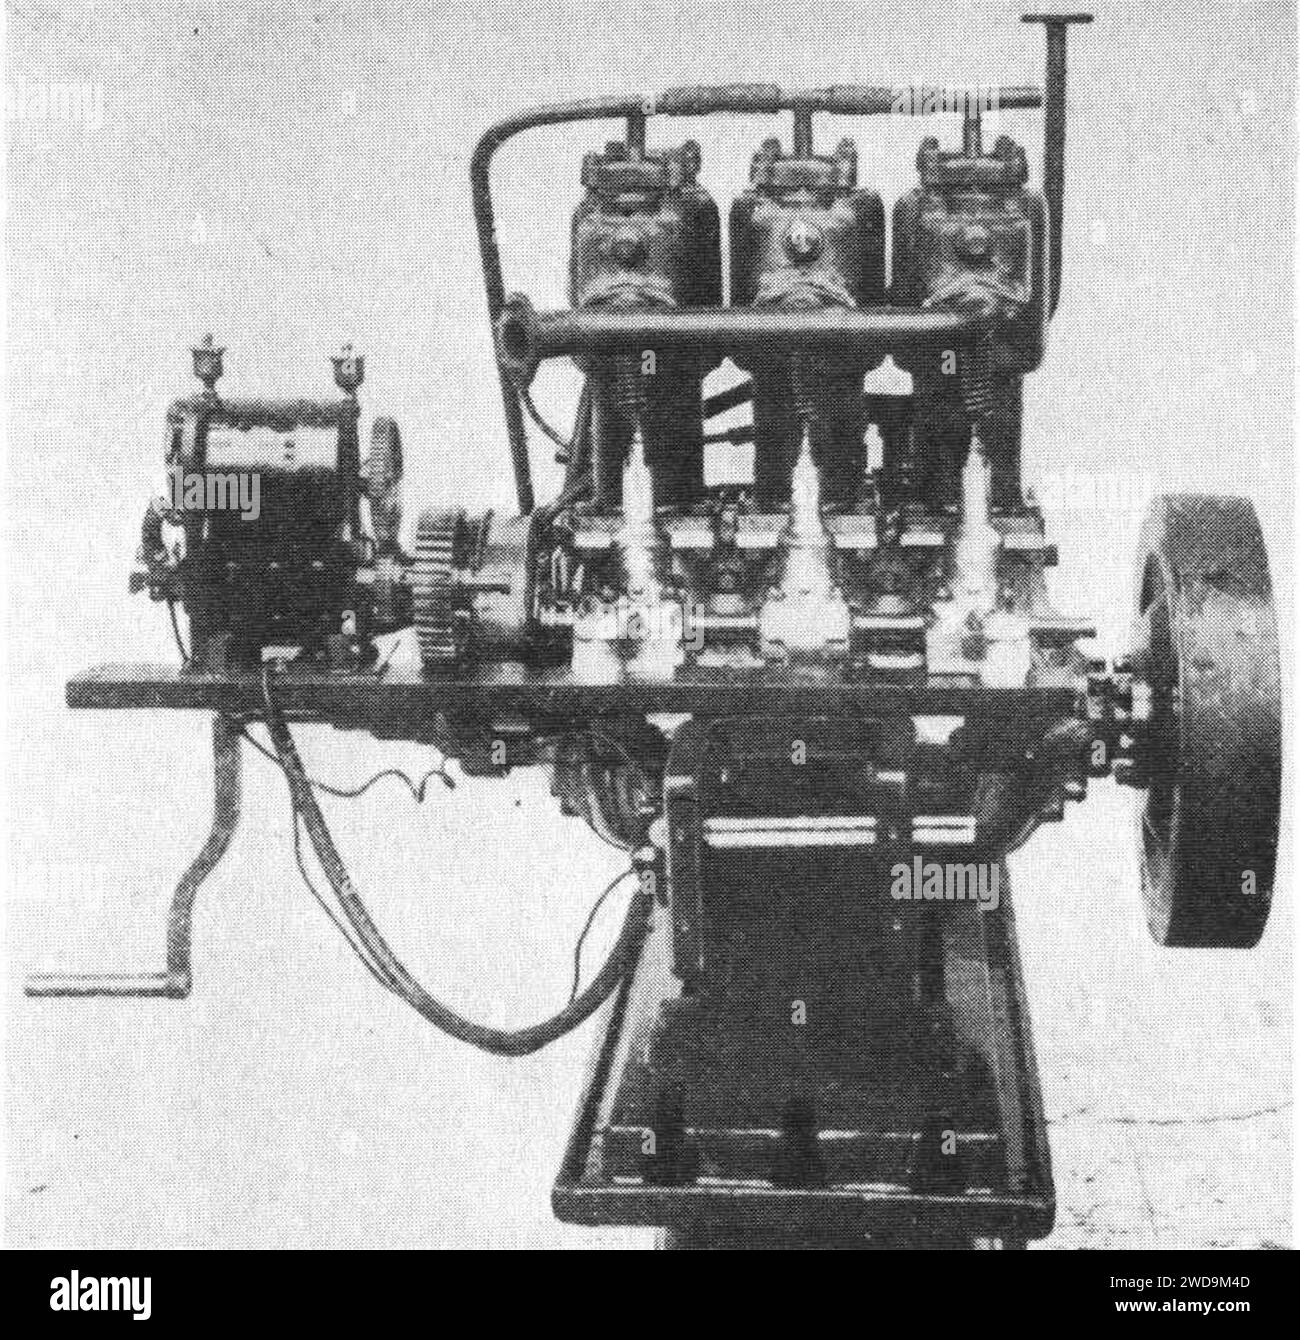 1904 - Panhard & Levassor - moteur fixe 3cyl. Stock Photo